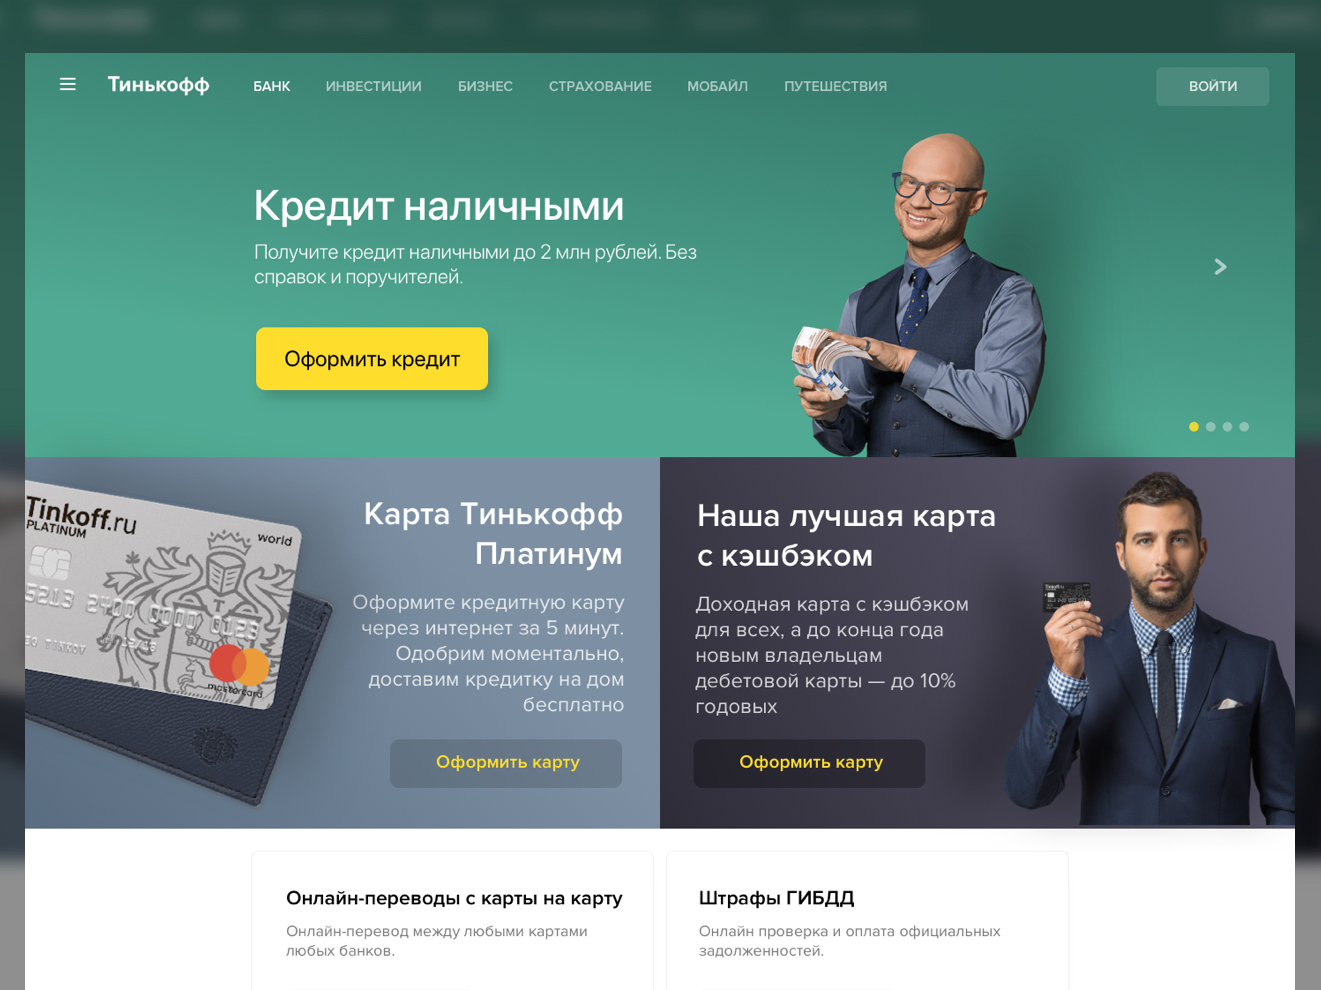 Web bank ru. Тинькофф лендинги. Тинькофф лендинговая страница. Хороший лендинг тинькофф. Банк концепт.